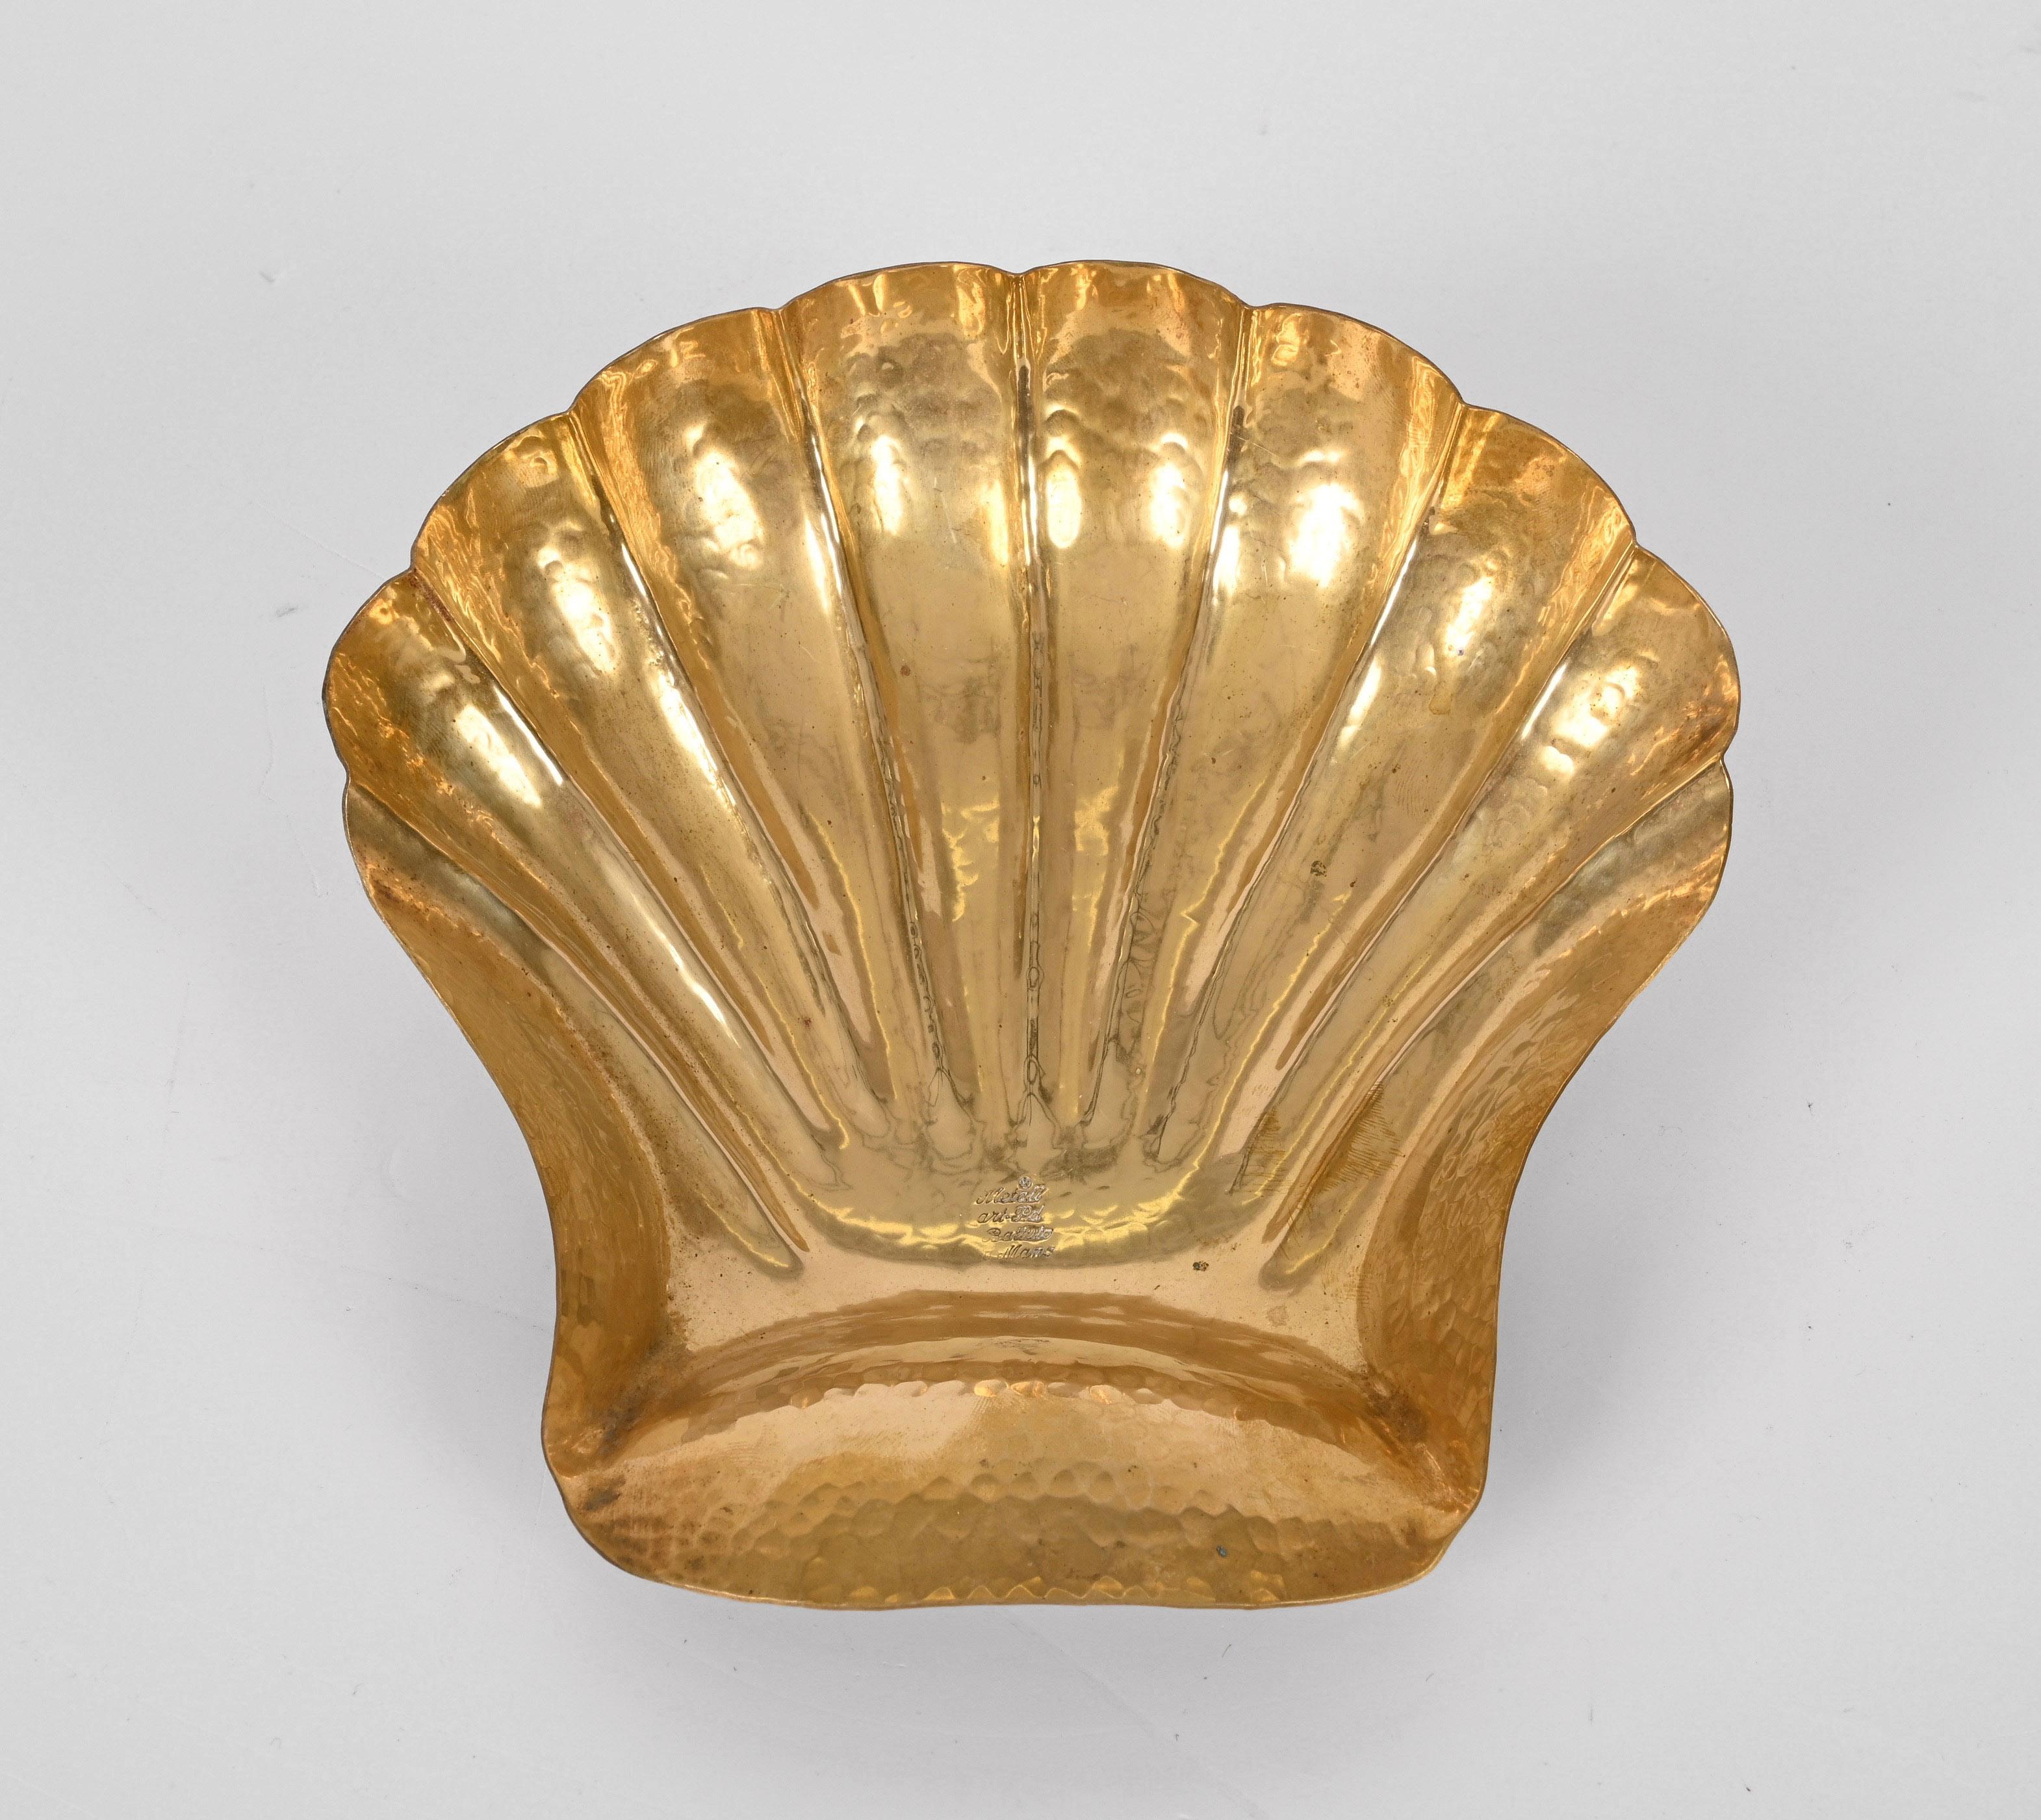 Set of Midcentury Italian Handmade Brass Shell Shaped Bowls for Metal Art, 1970s For Sale 6